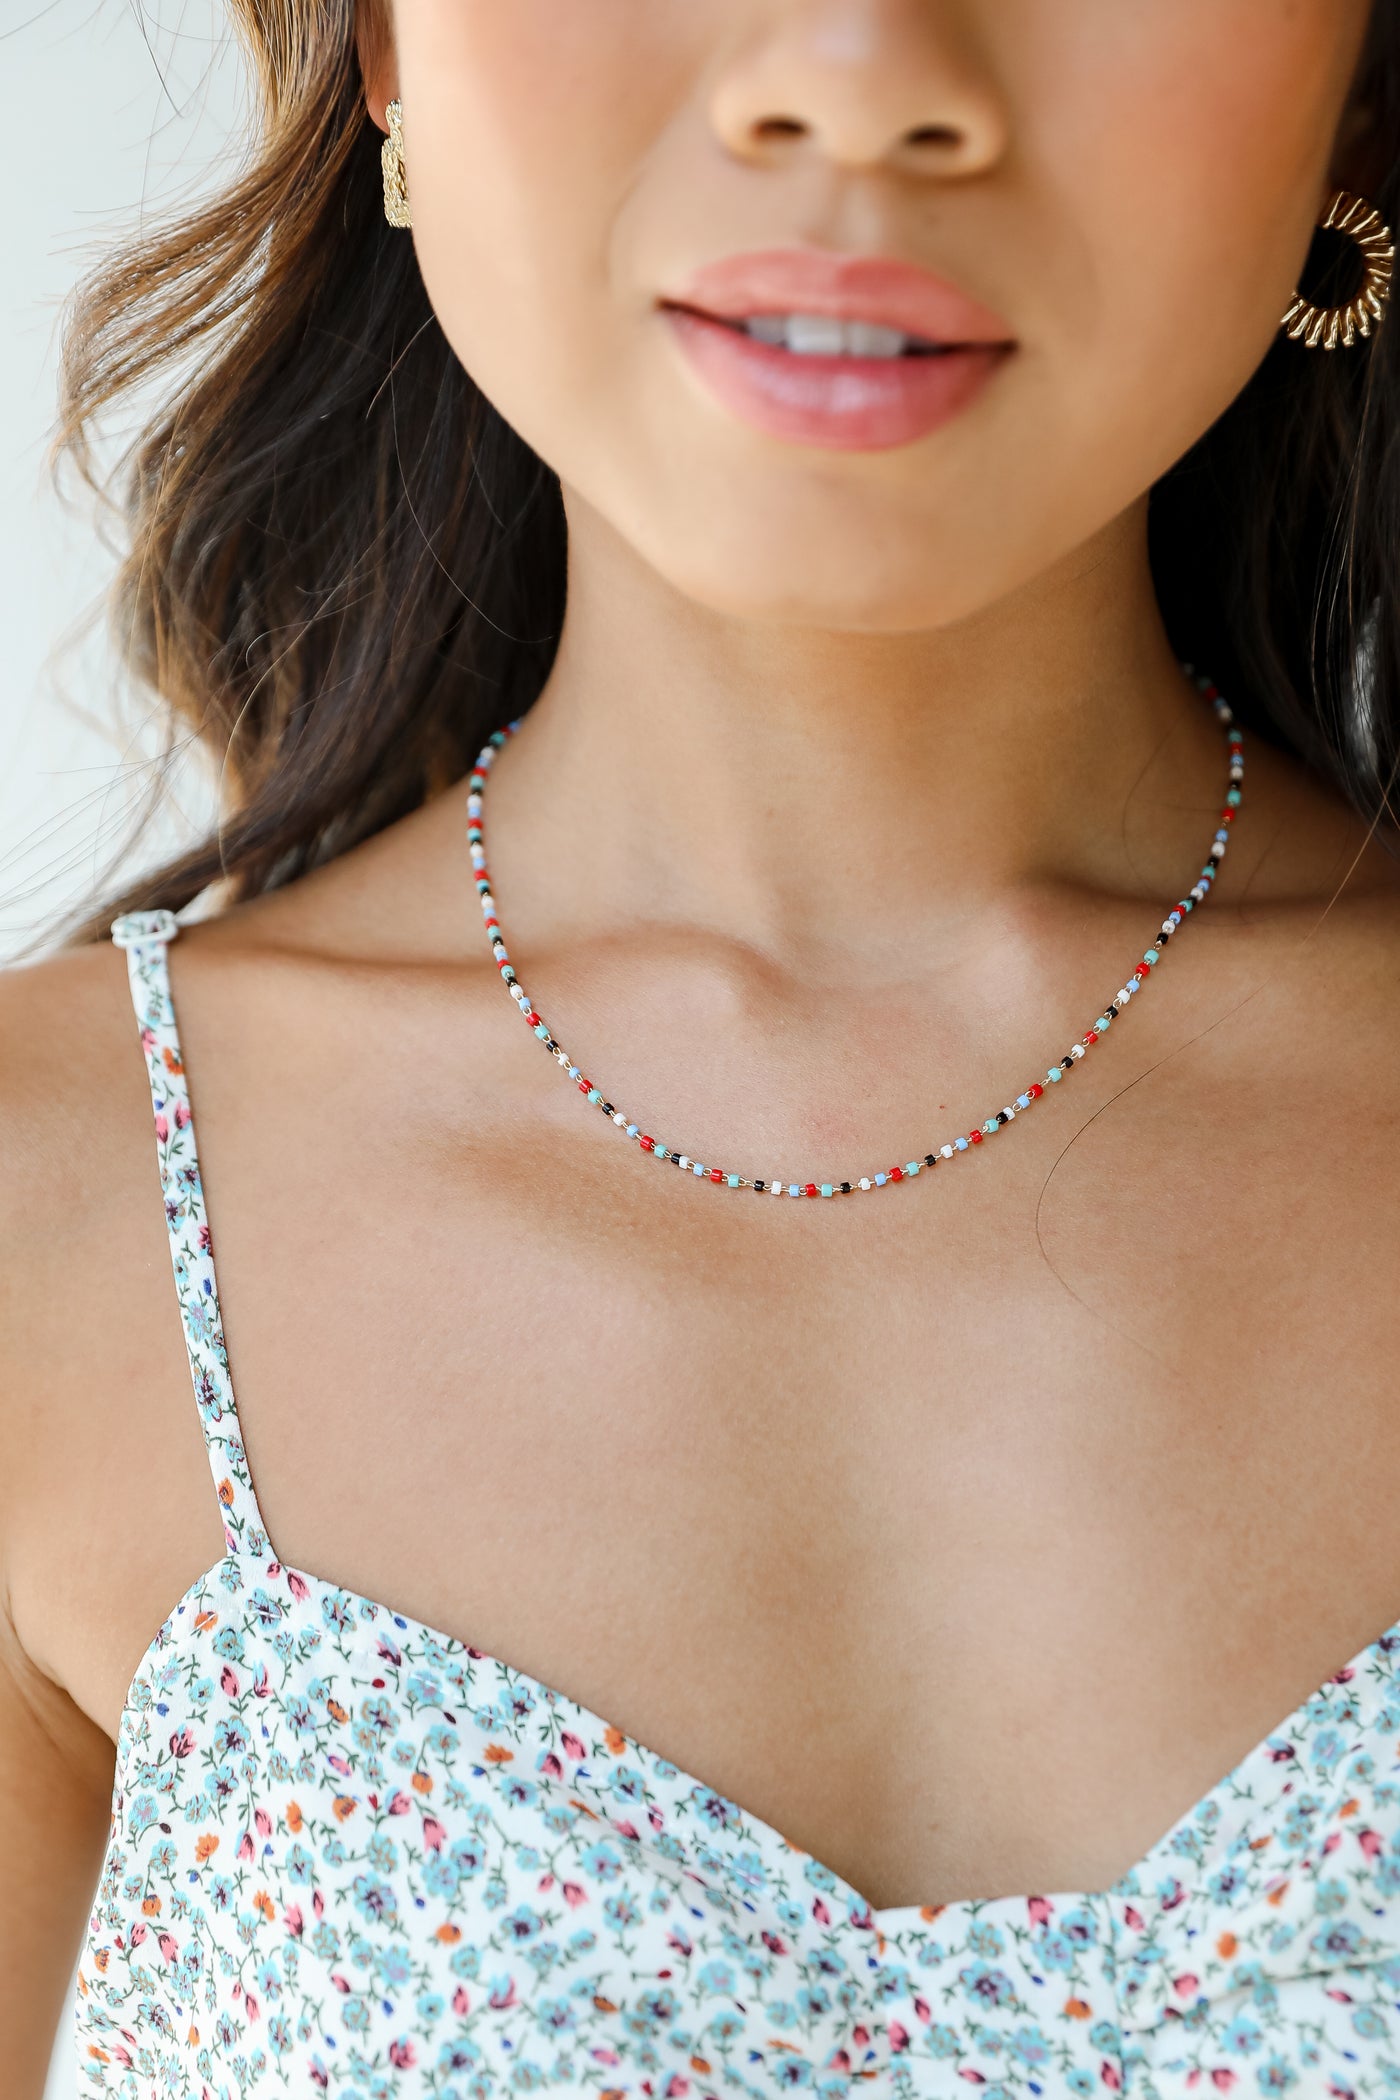 model wearing a dainty beaded necklace